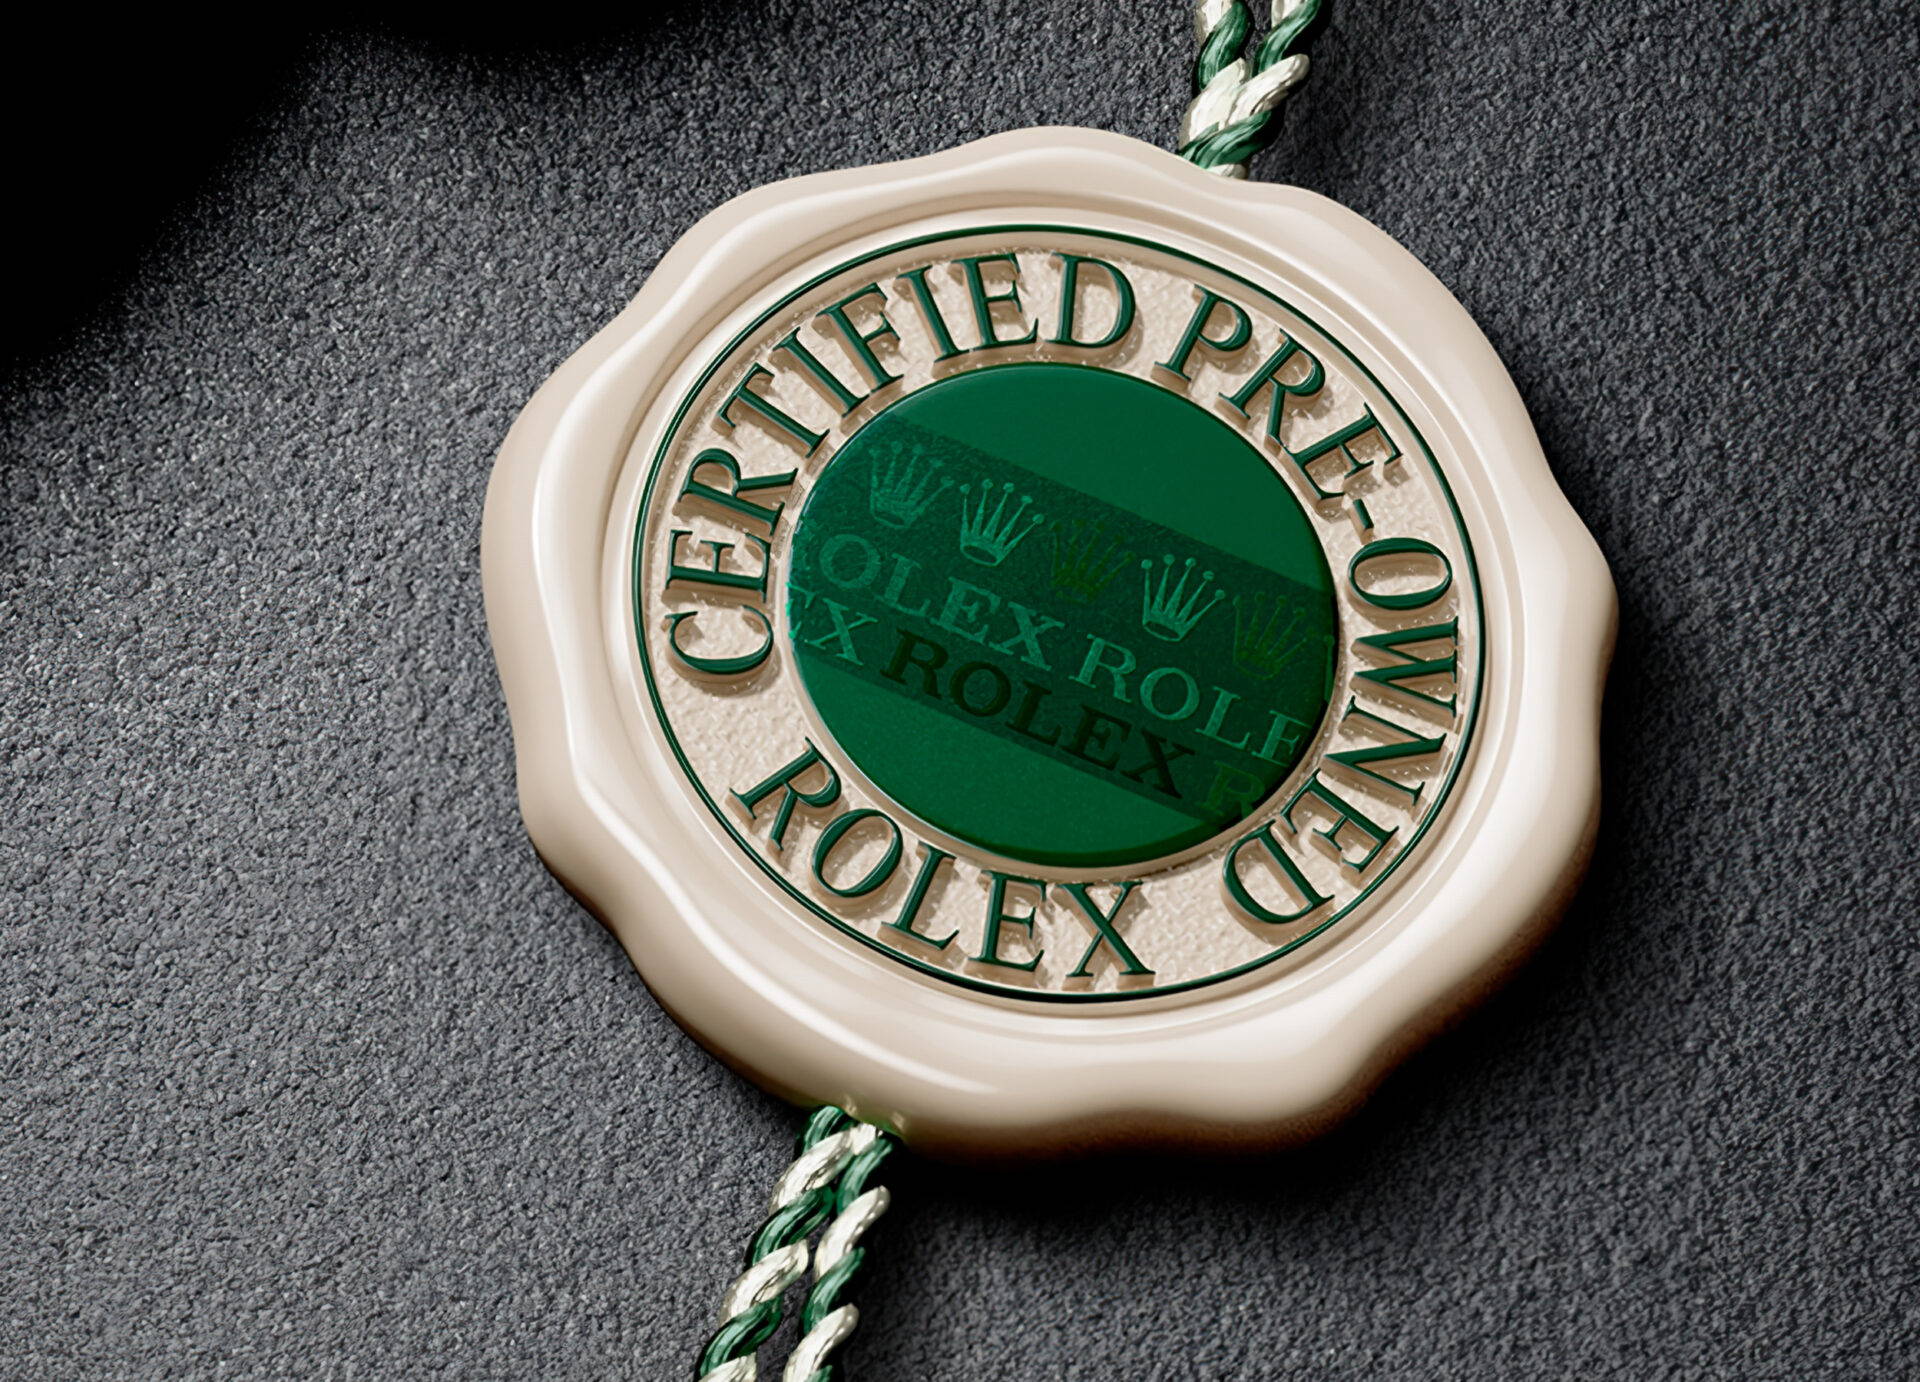 Rolex garantie